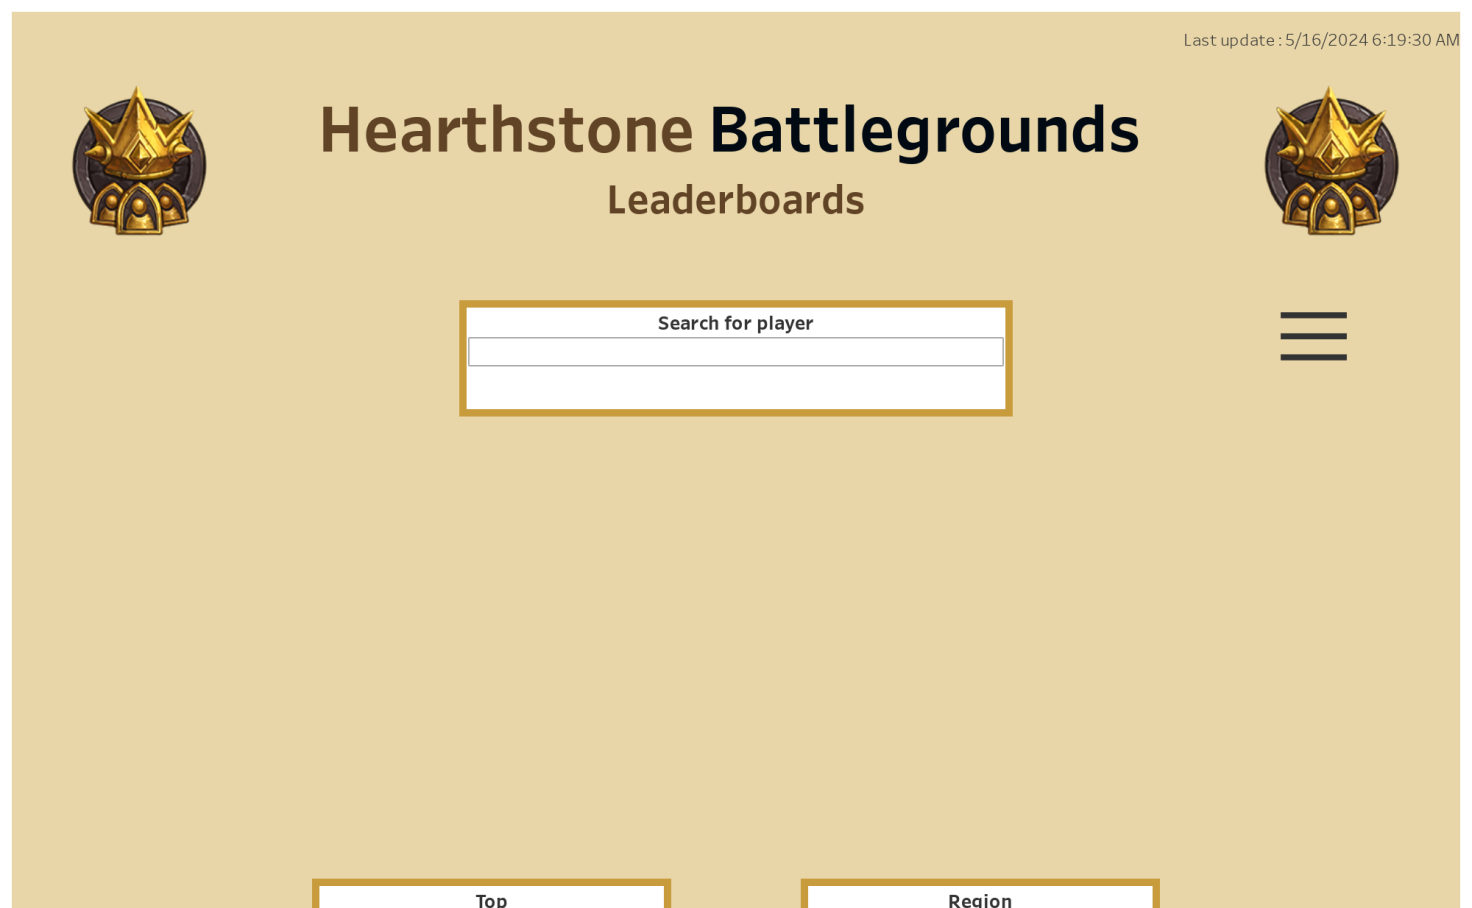 Hearthstone Battlegrounds - Leaderboards